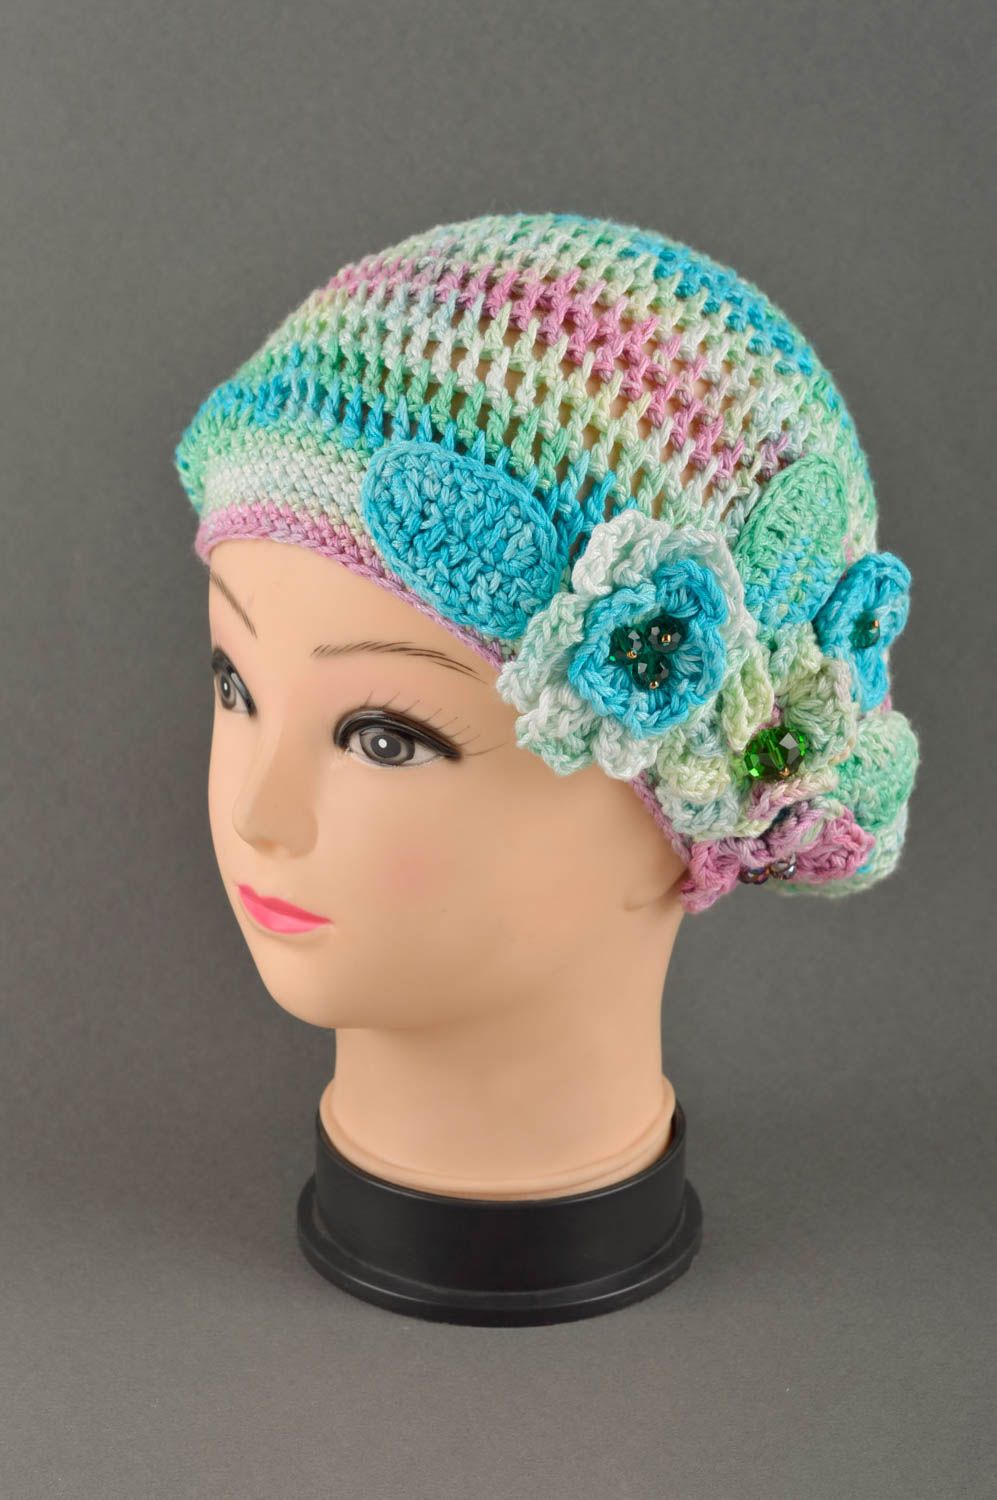 Handmade beret hat crochet beret designer accessories for women gifts for girls photo 1